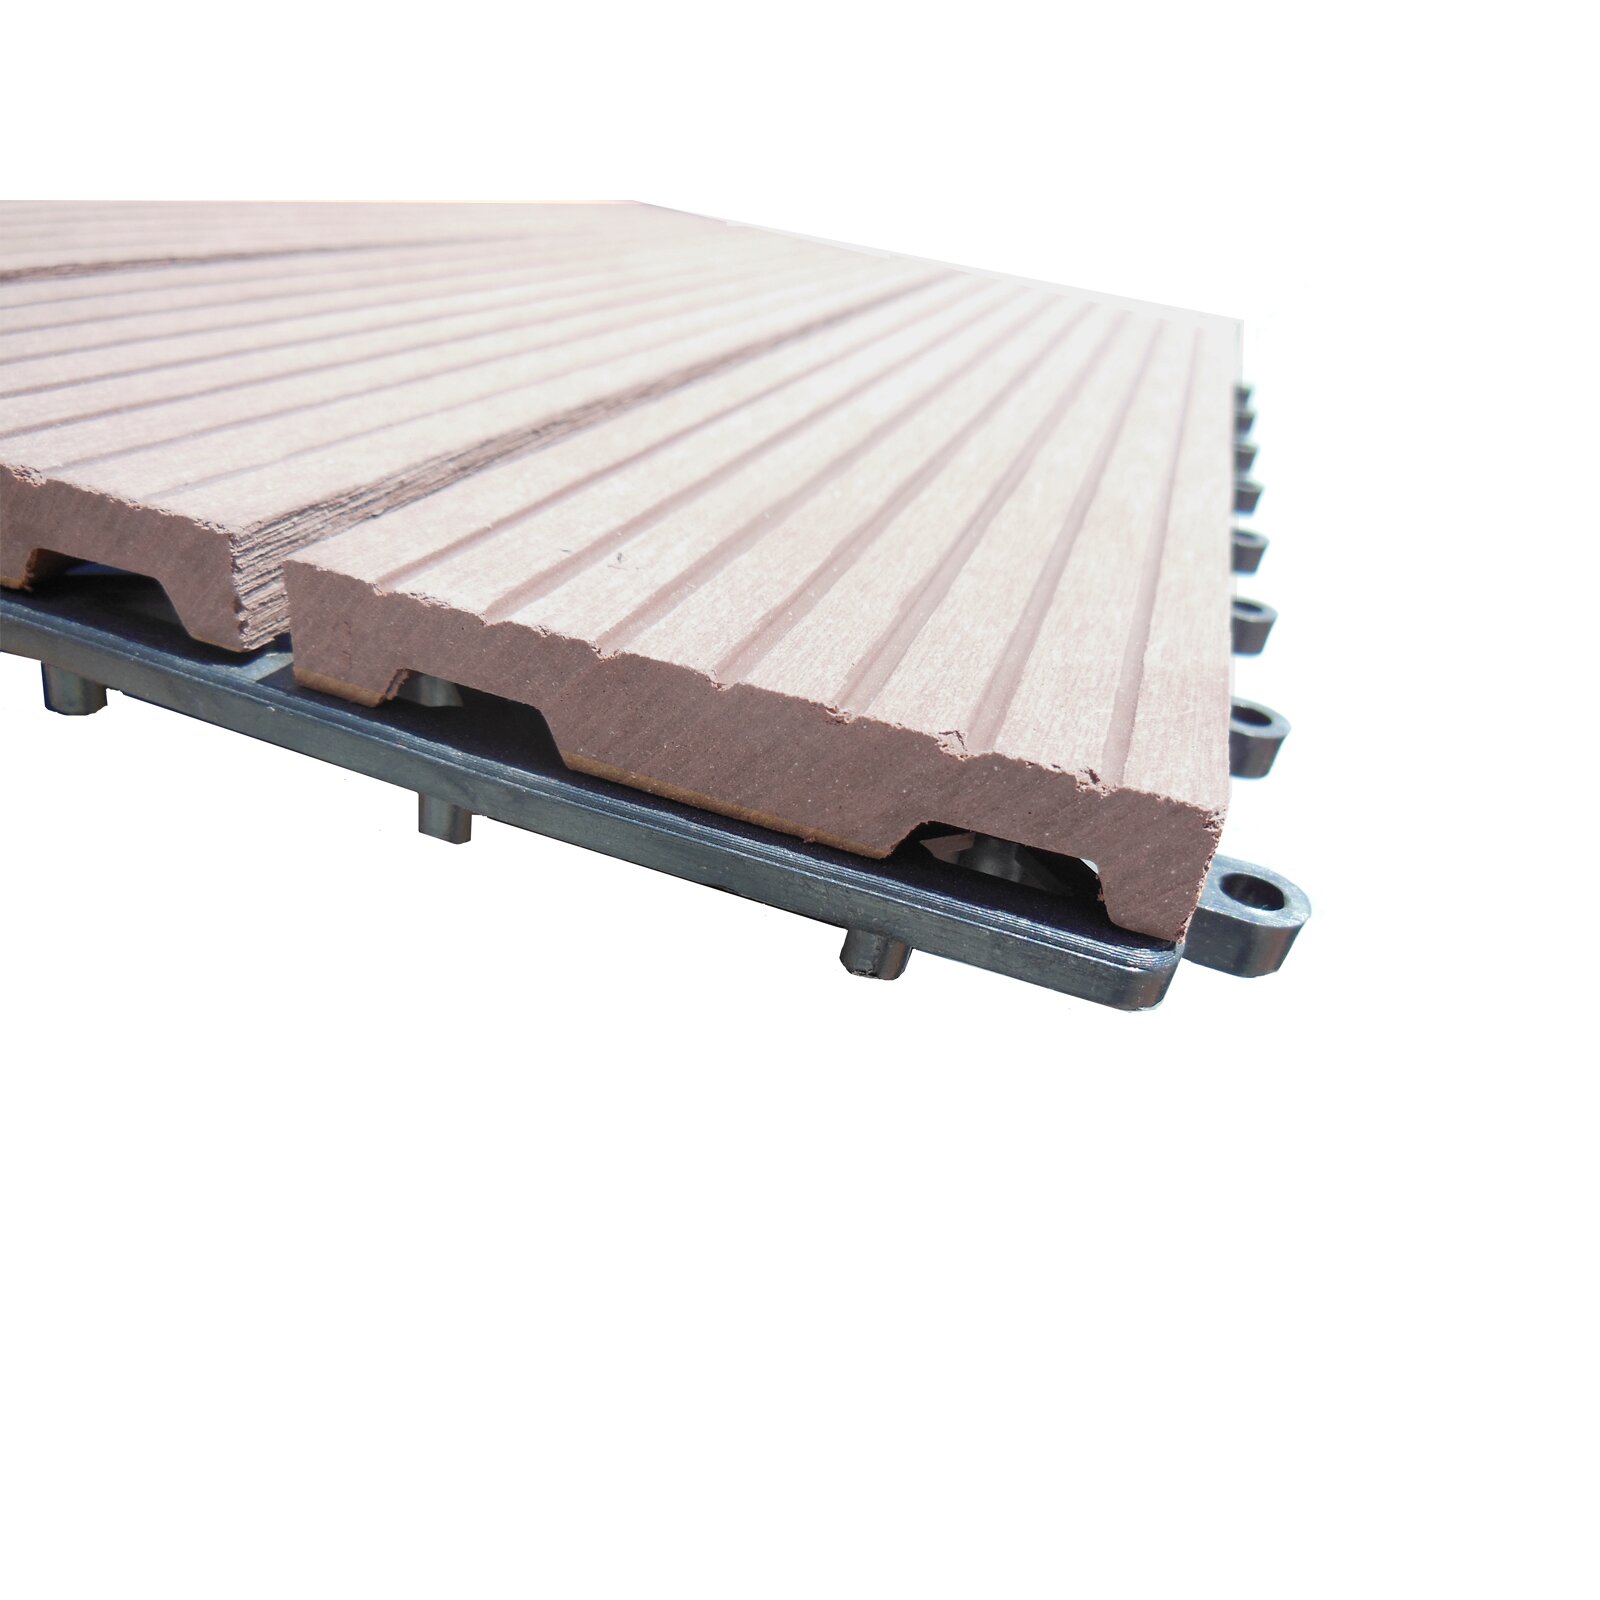 interlocking deck tiles